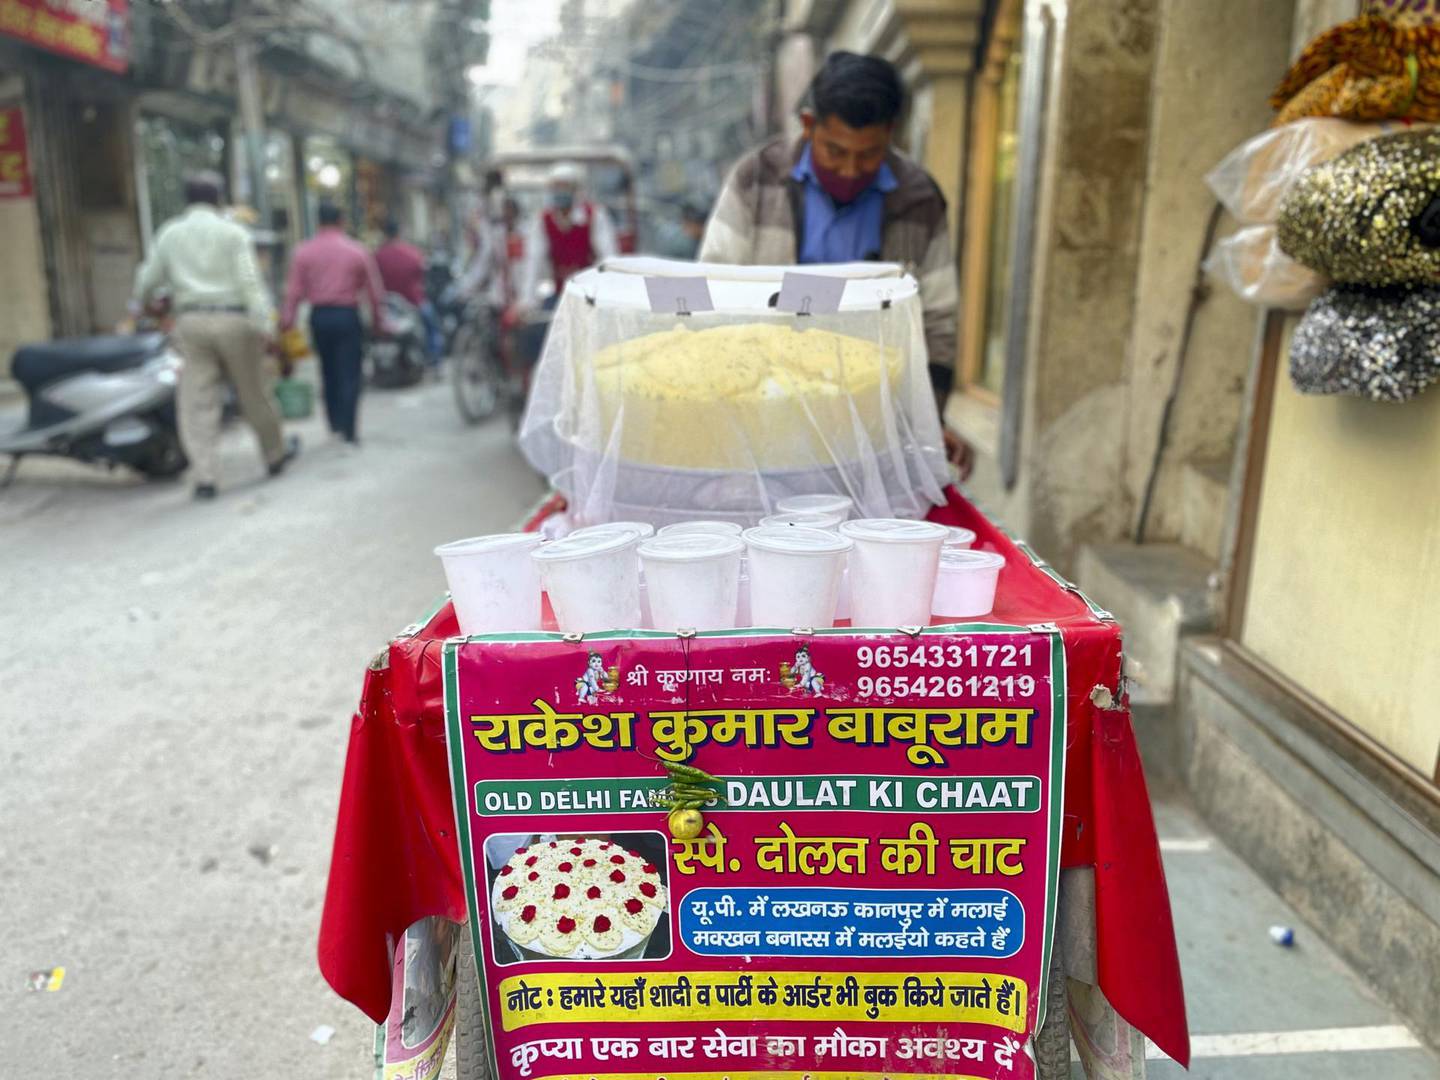 Rakesh Kumar Baburam sells daulat ki chaat from a colourful cart in Chandni Chowk, an area in Old Delhi. Photo: Rakesh Kumar